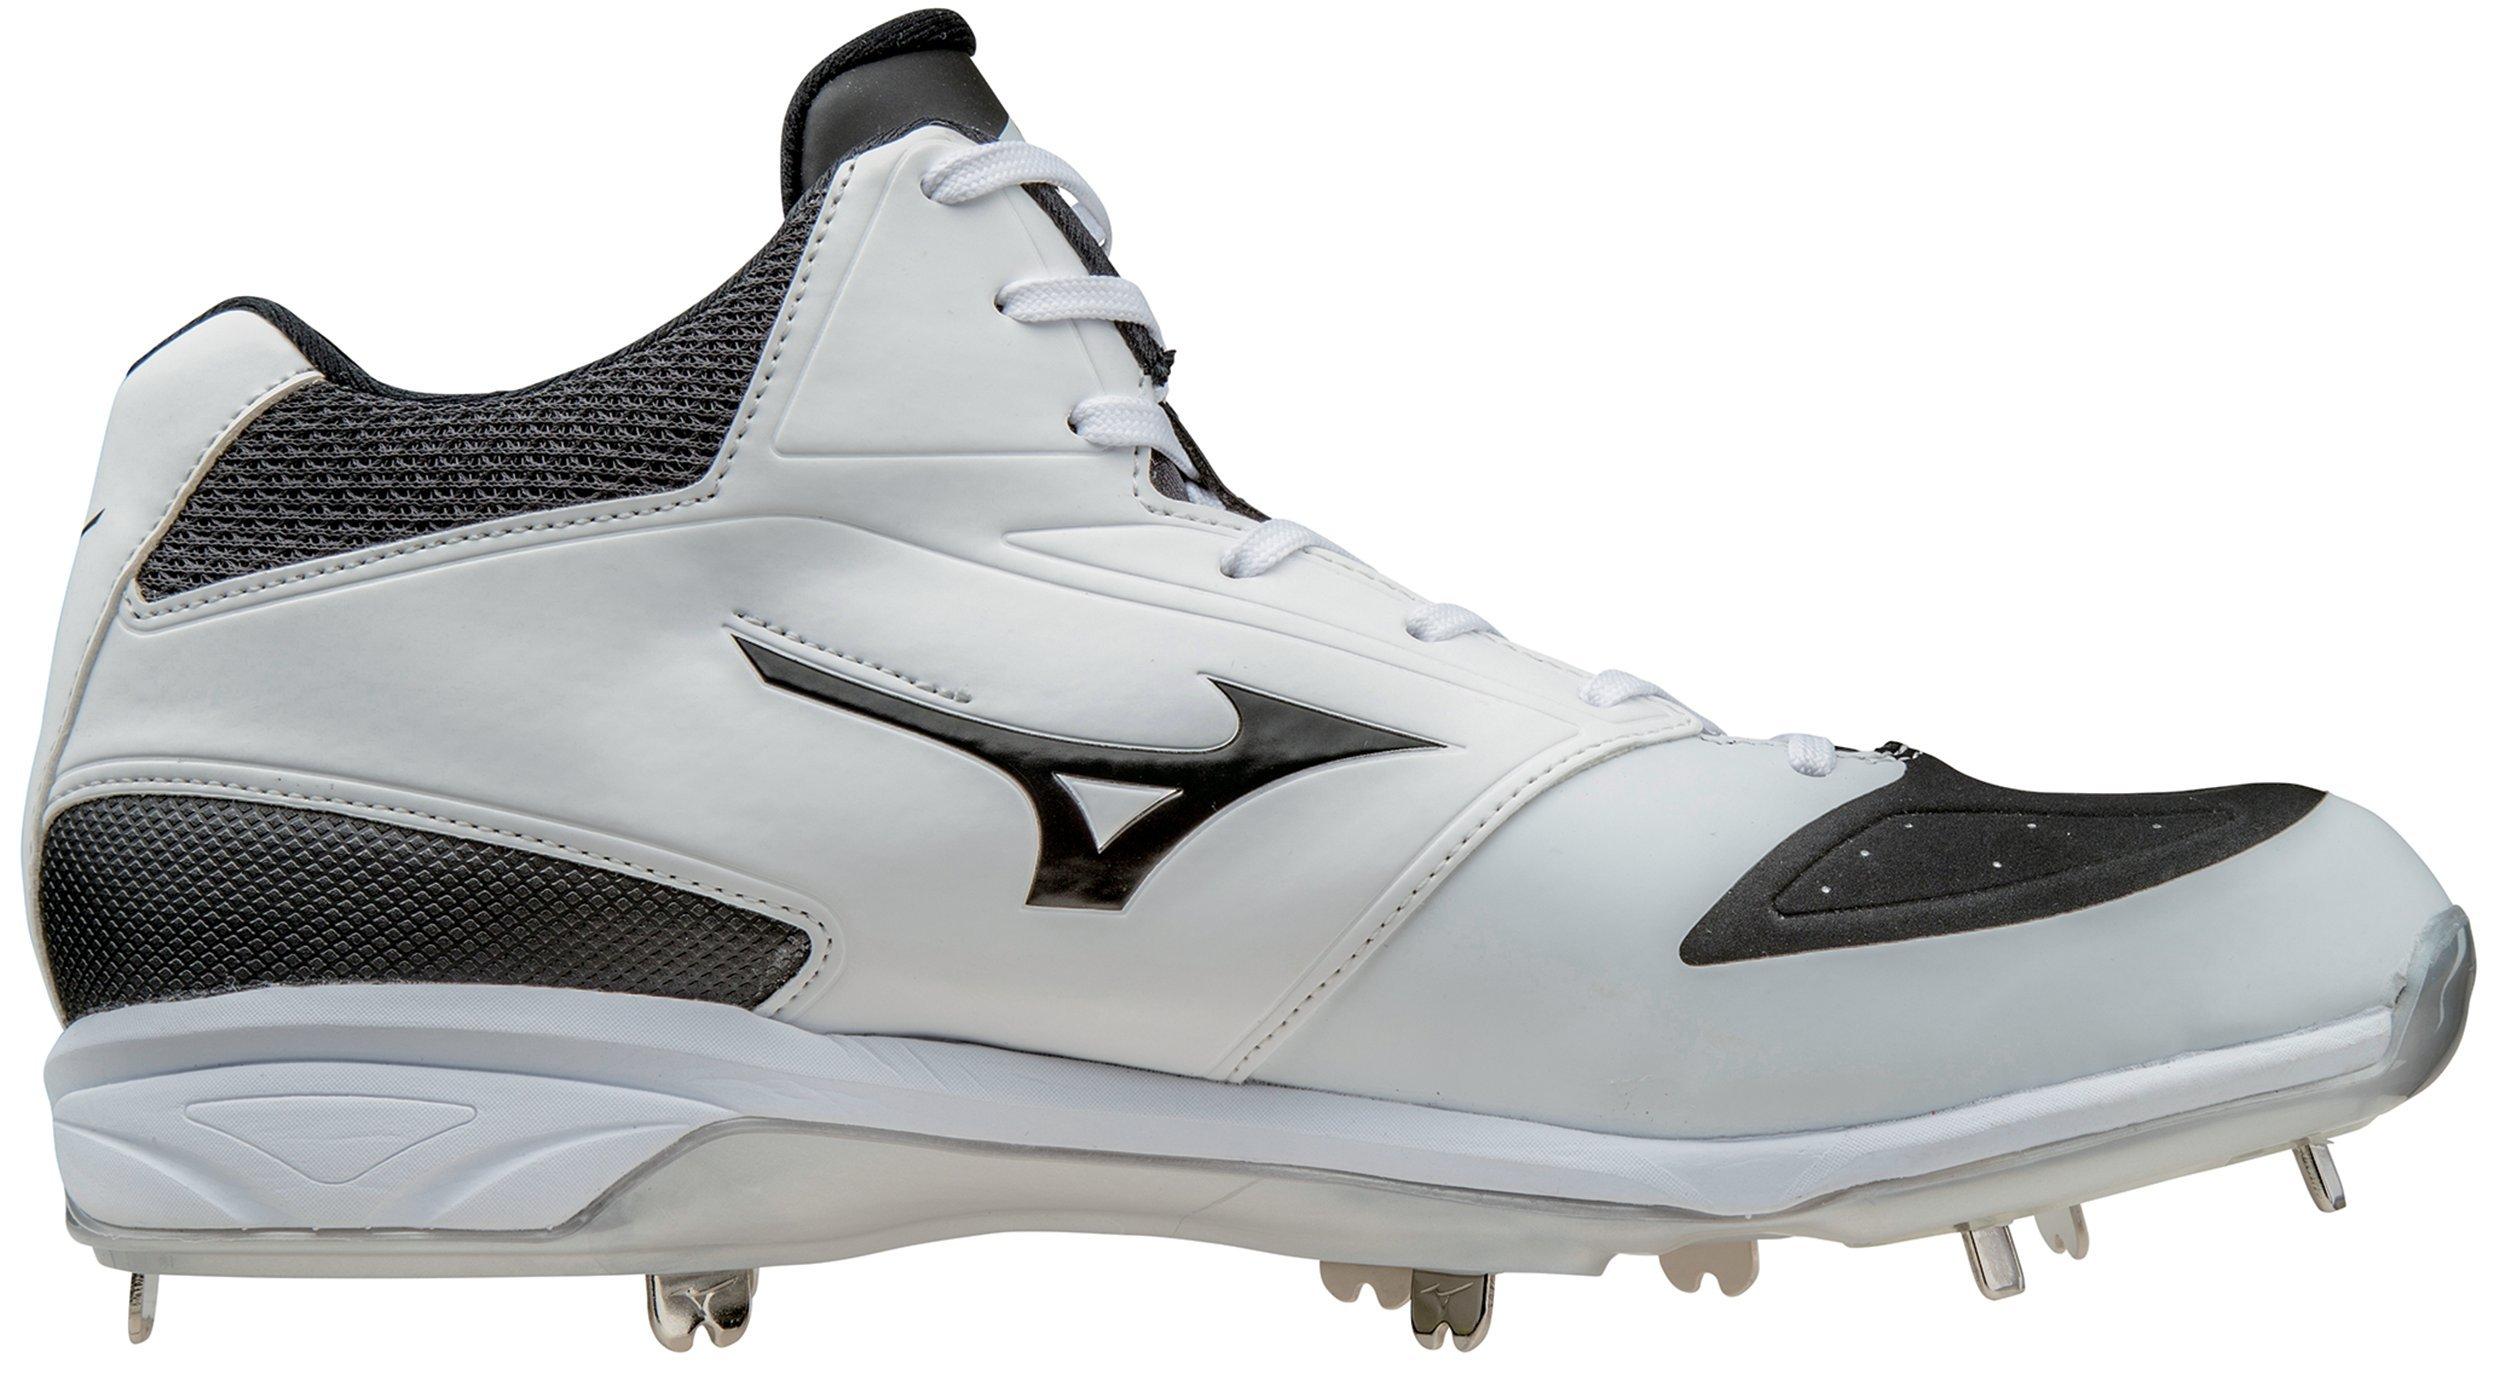 Black/White Mizuno Mens 9-Spike Dominant IC Mid Metal Baseball Cleat Athletic Shoe 